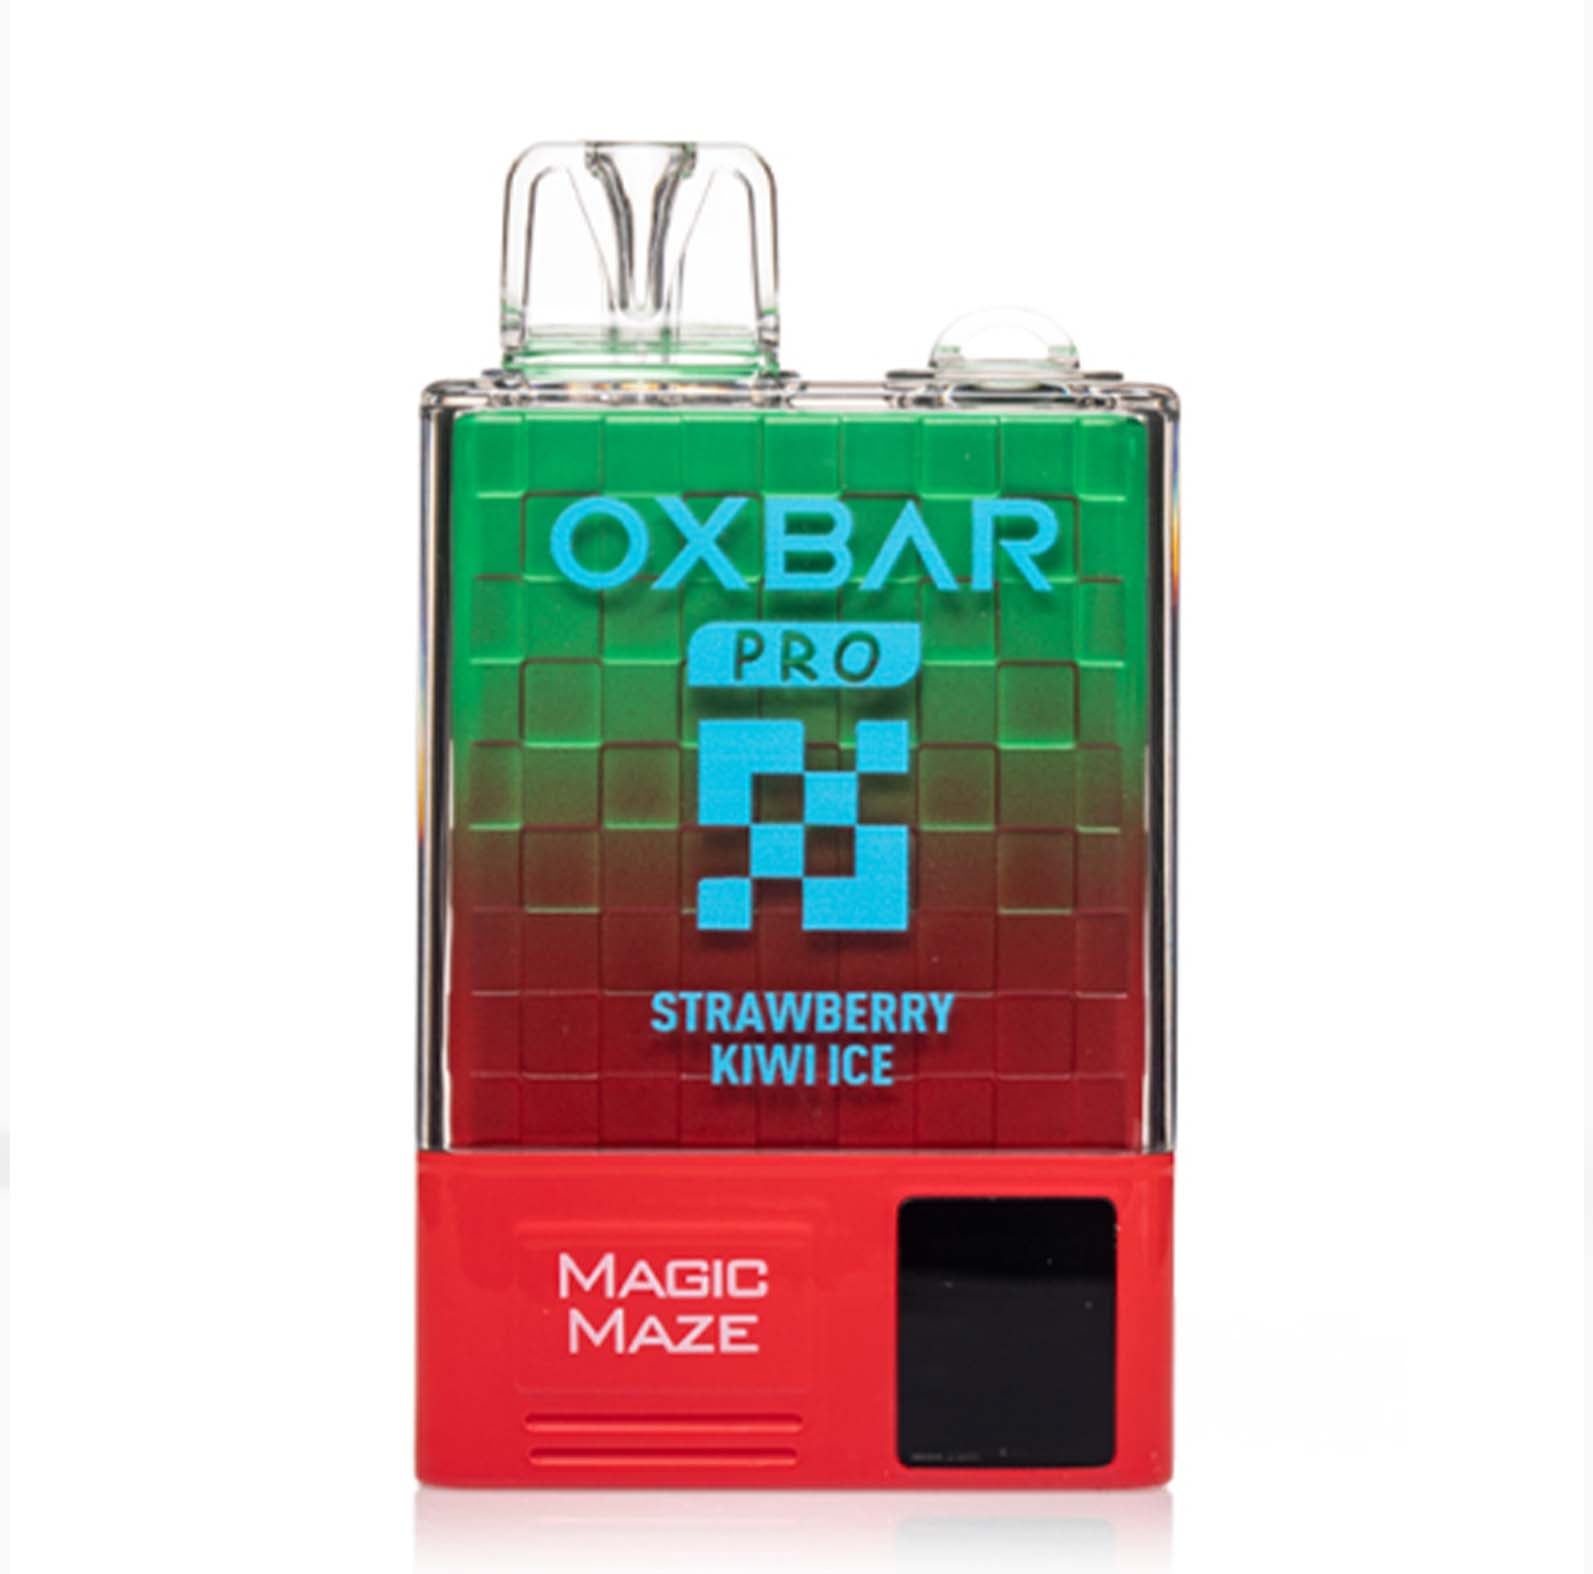 OXBAR Magic Maze Strawberry Kiwi Ice